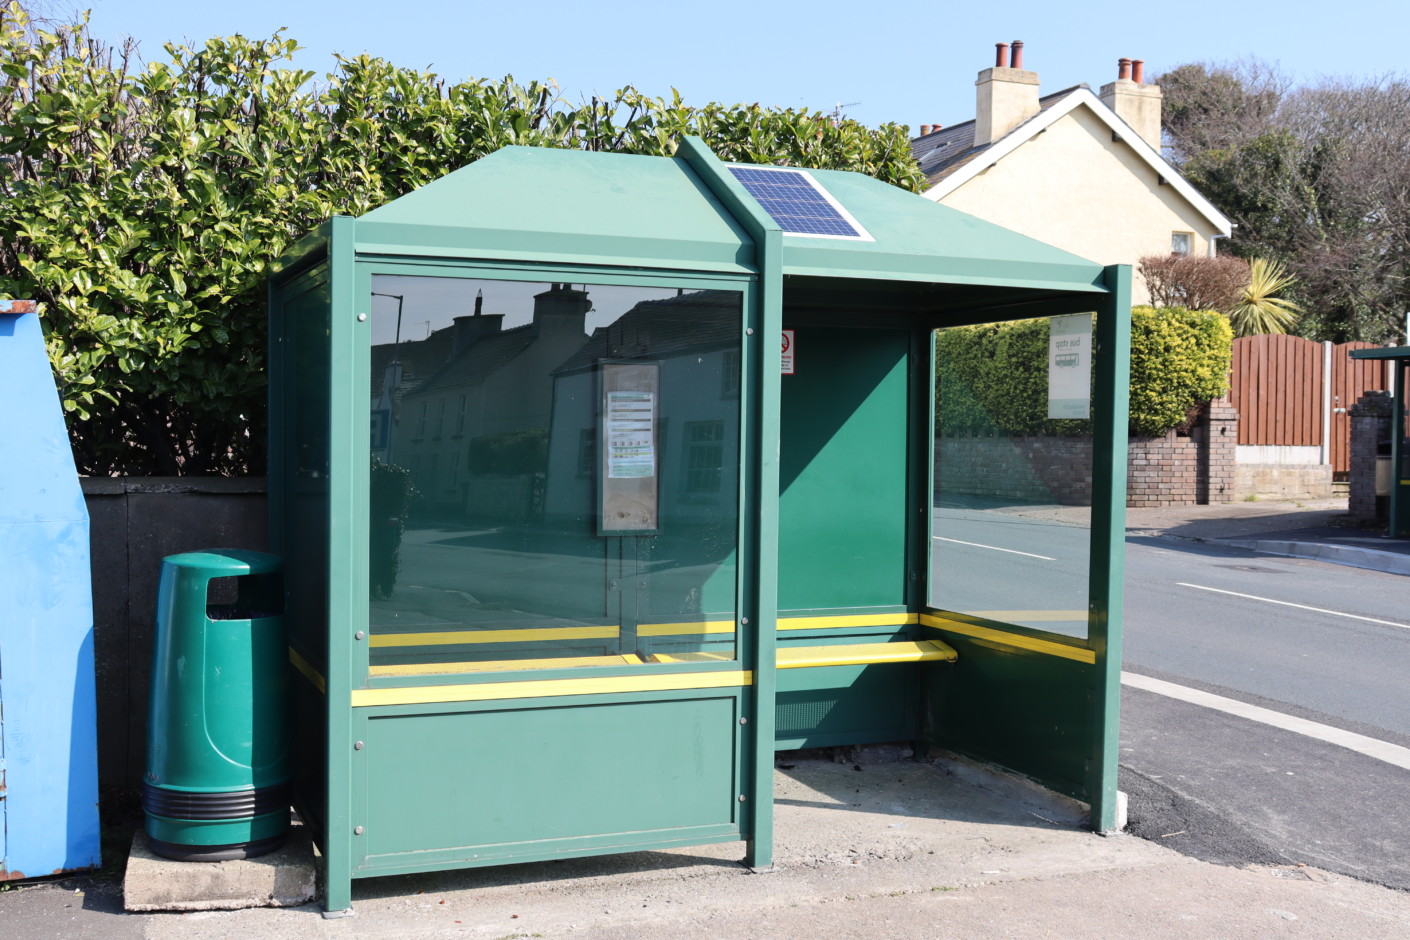 Solar Powered Bus Shelter